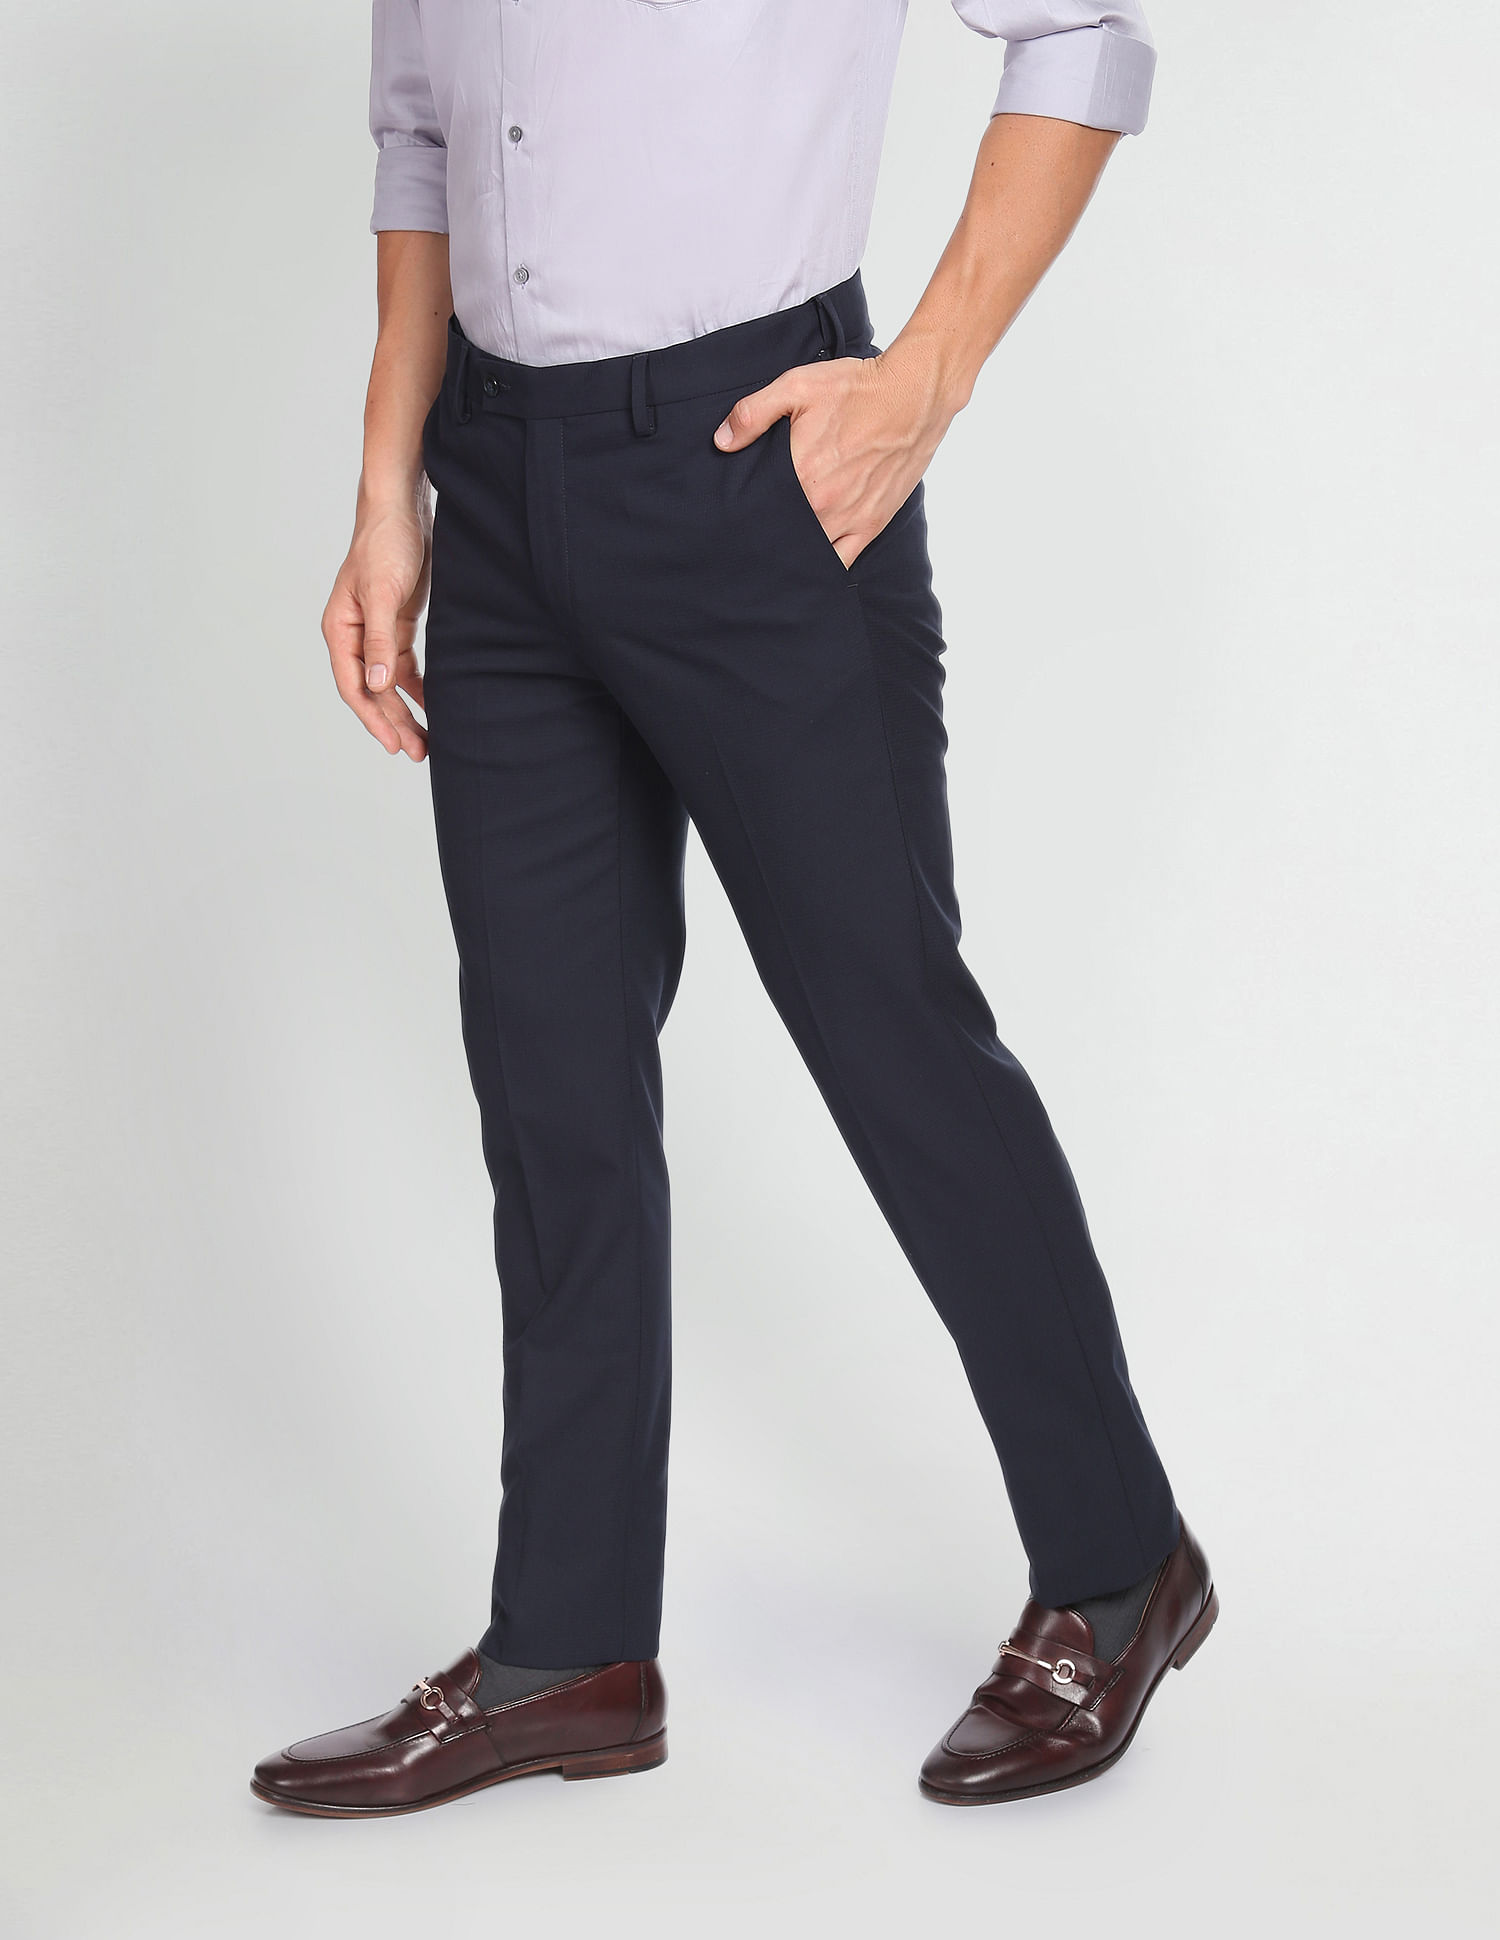 Style Hook Polyster Blend Formal Trousers For smart flex Man regular fit |formal  pants blue | black | trousers for men | officeial pant |